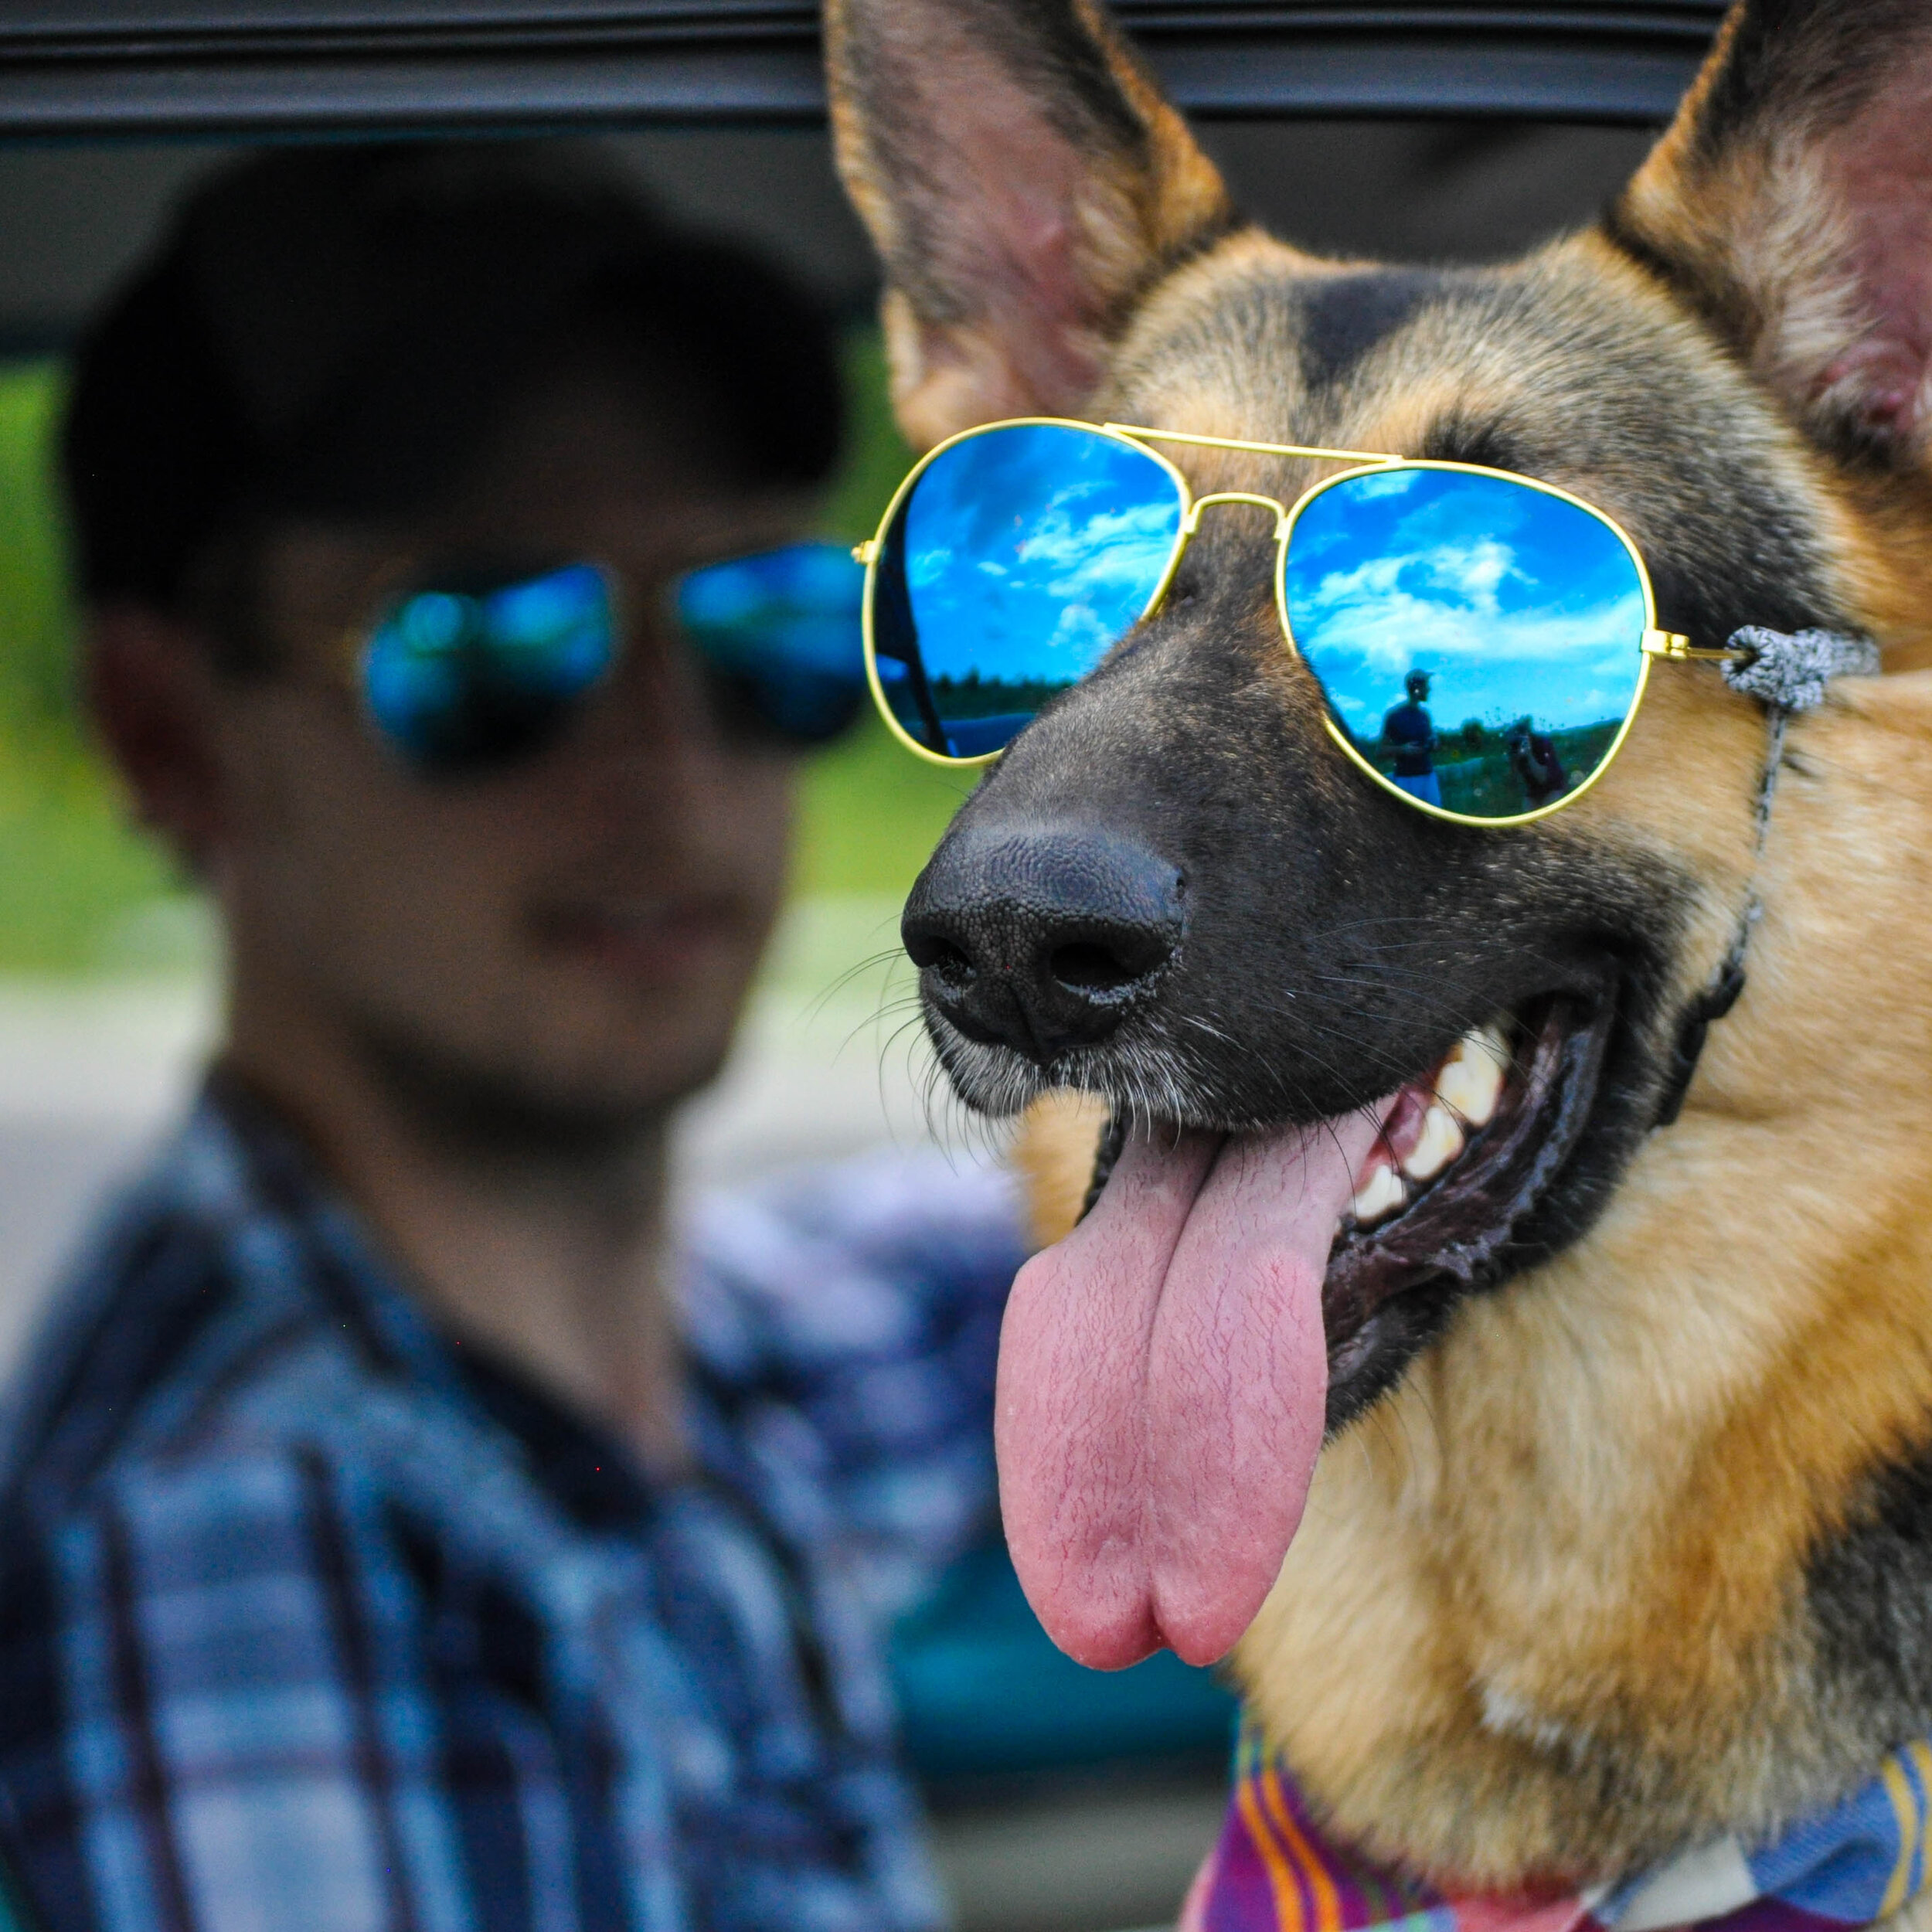 sunglasses on dogs